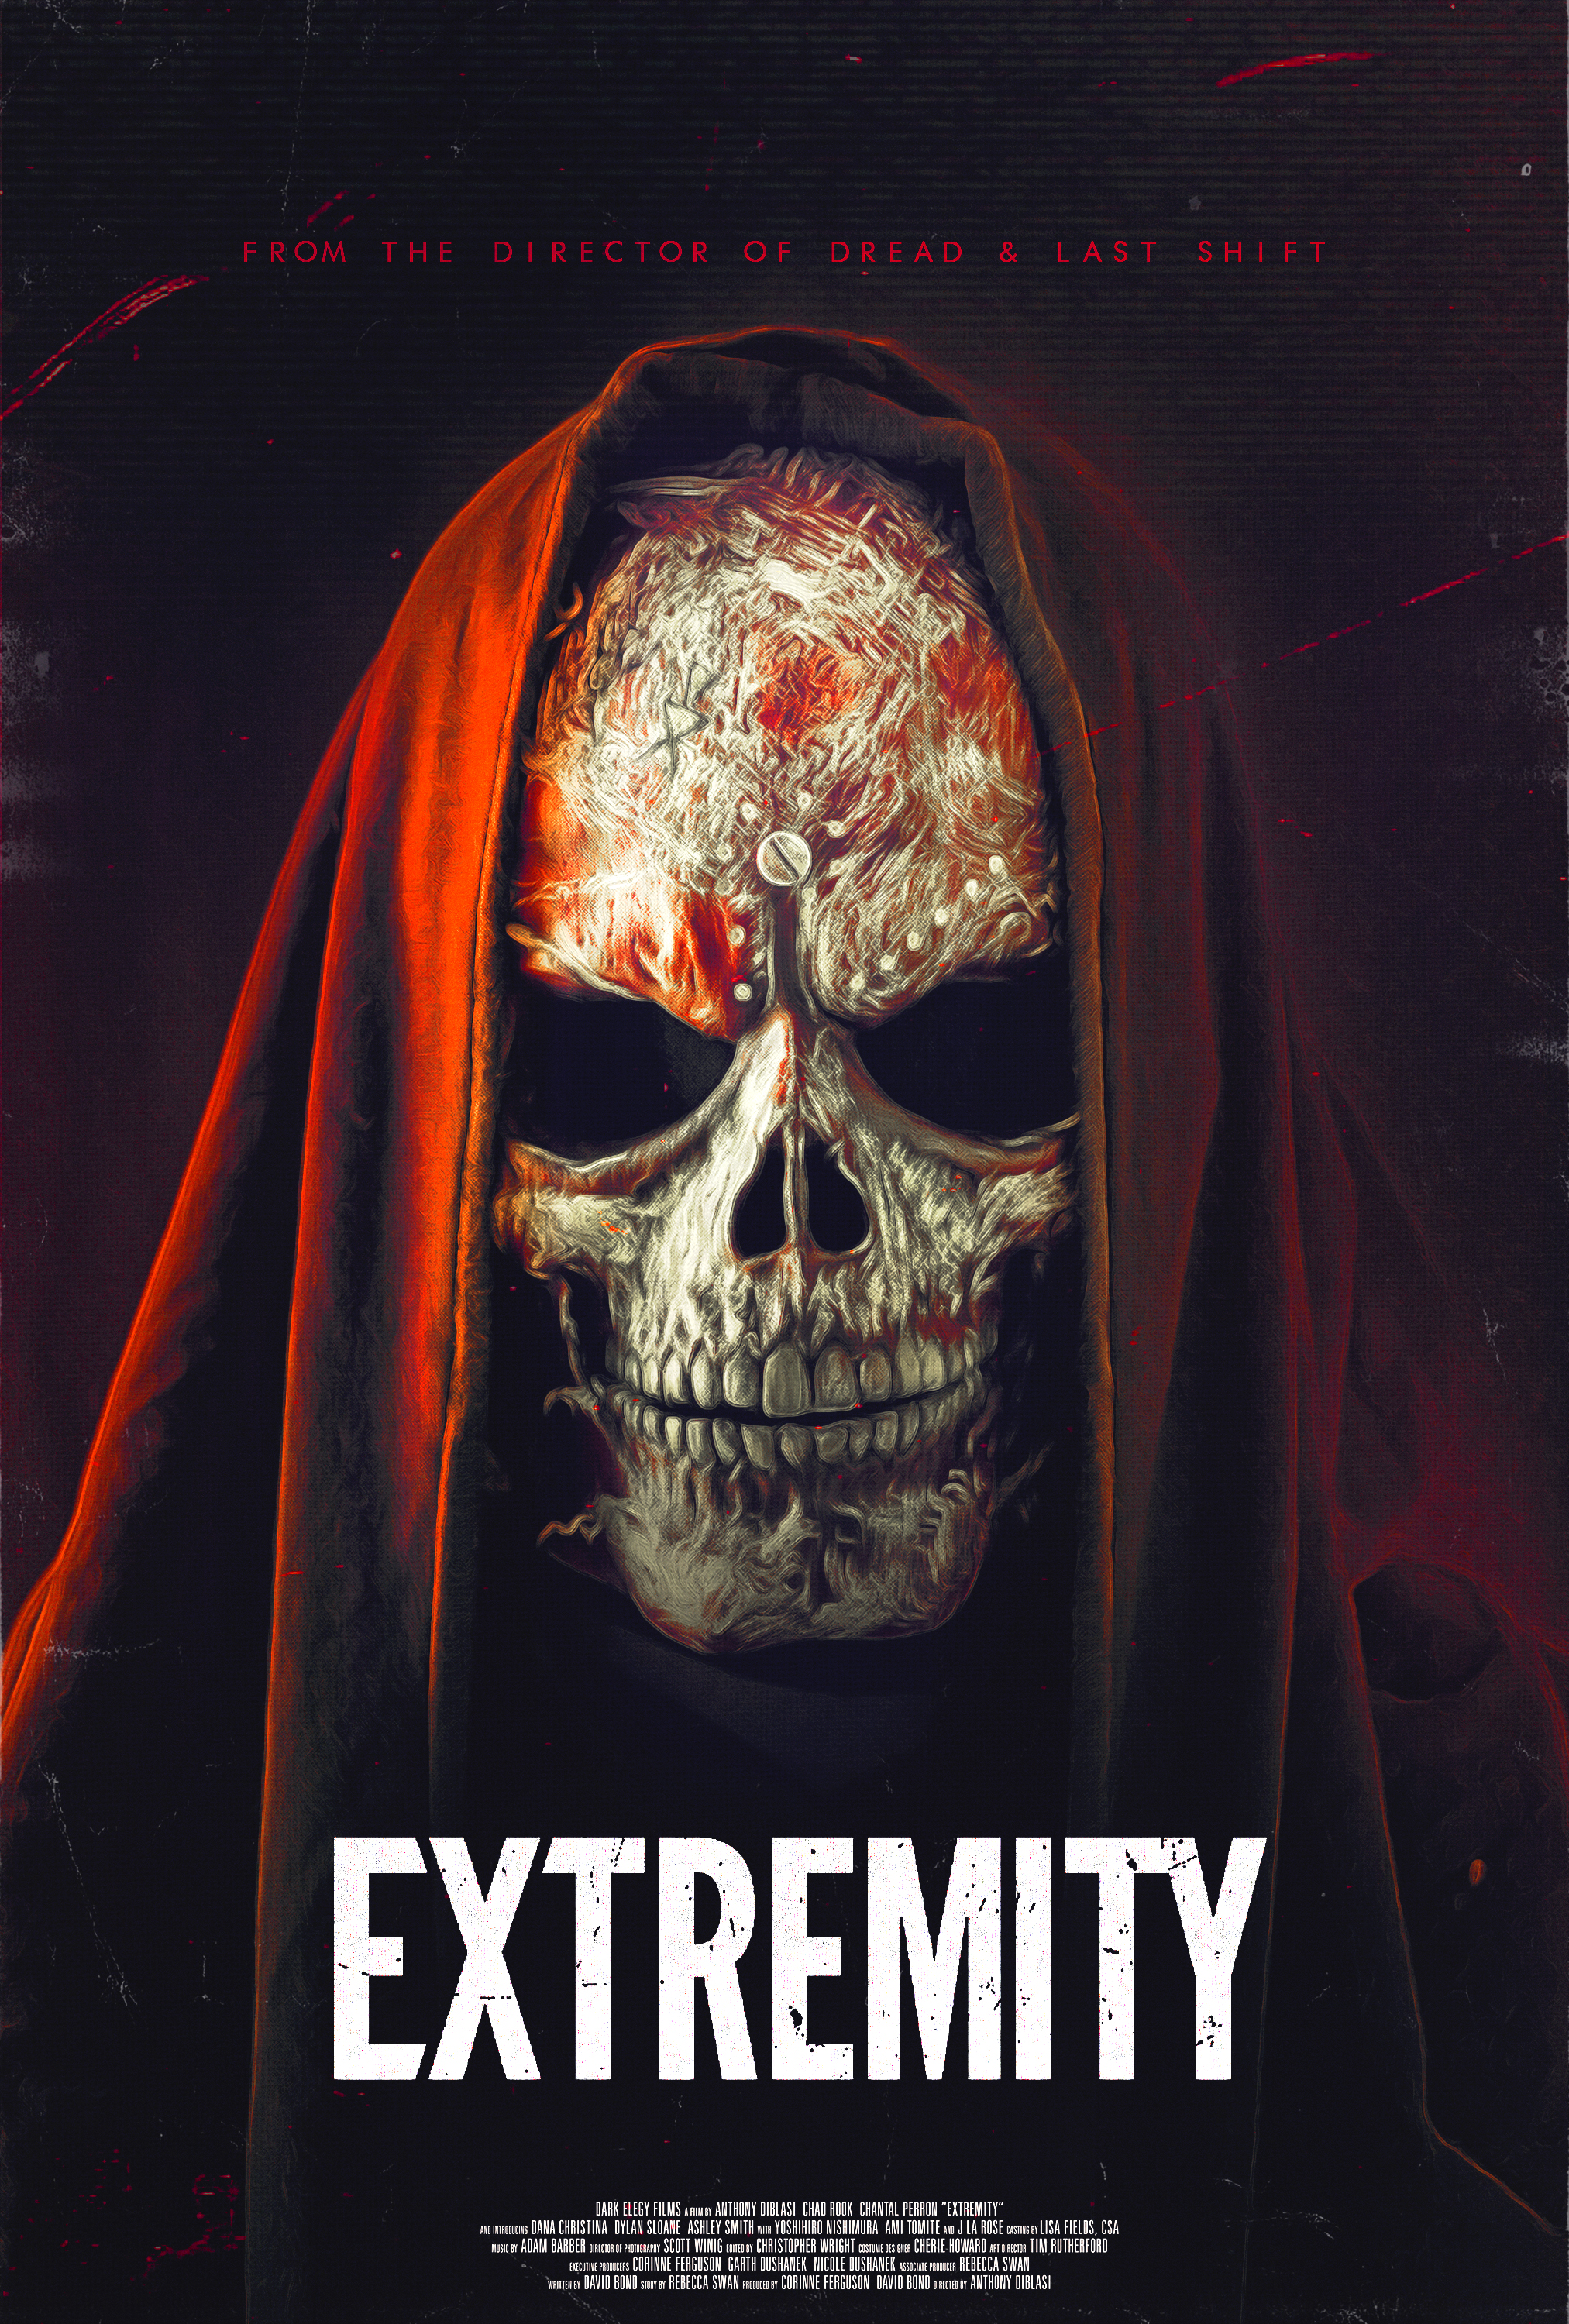 Nonton film Extremity layarkaca21 indoxx1 ganool online streaming terbaru